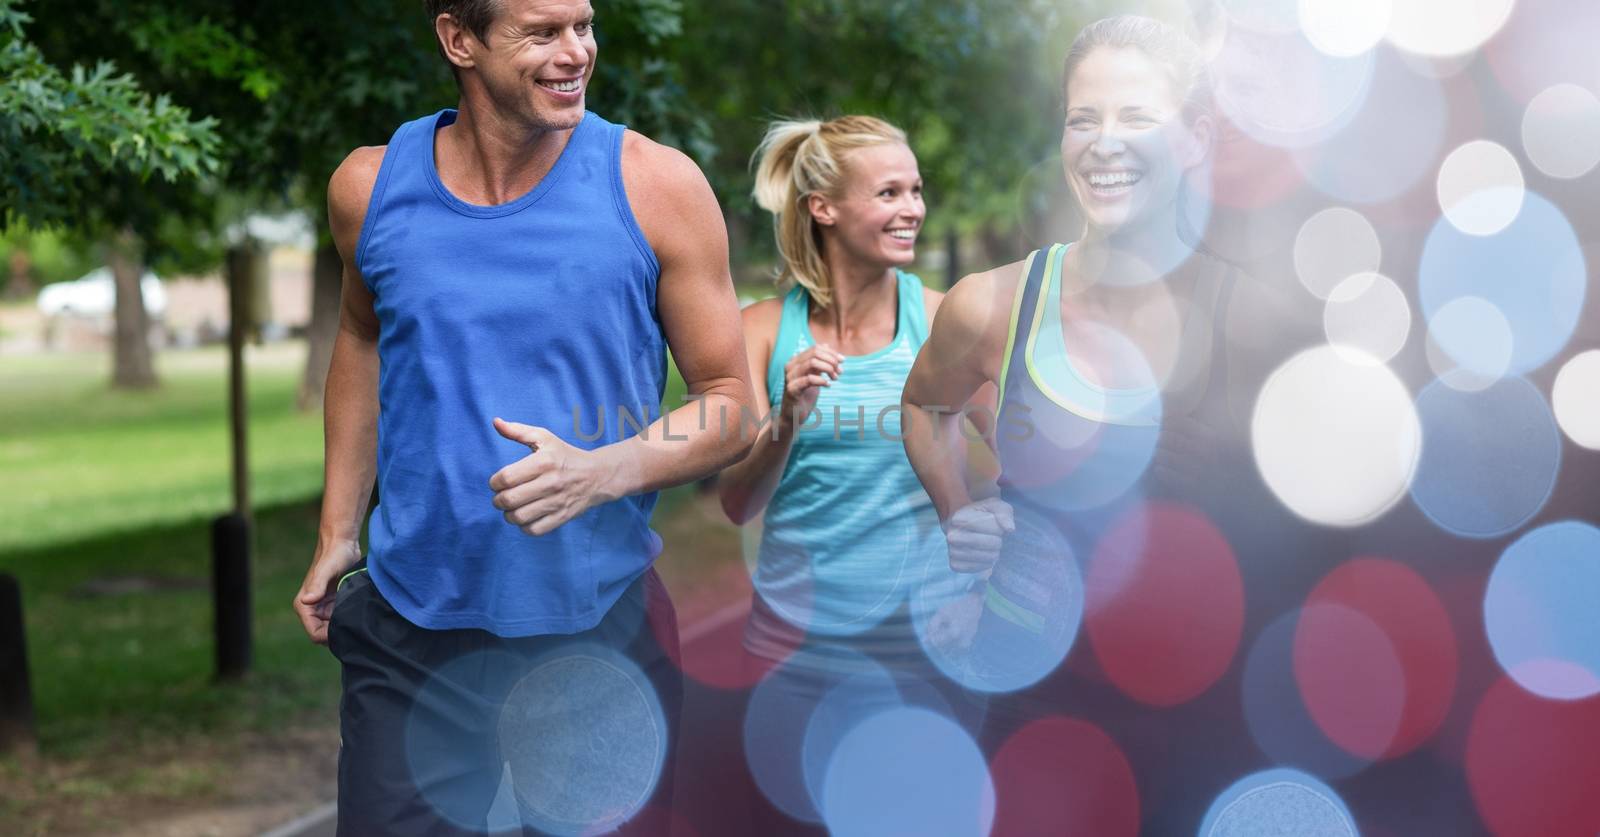 Digital composite of Happy people jogging in park